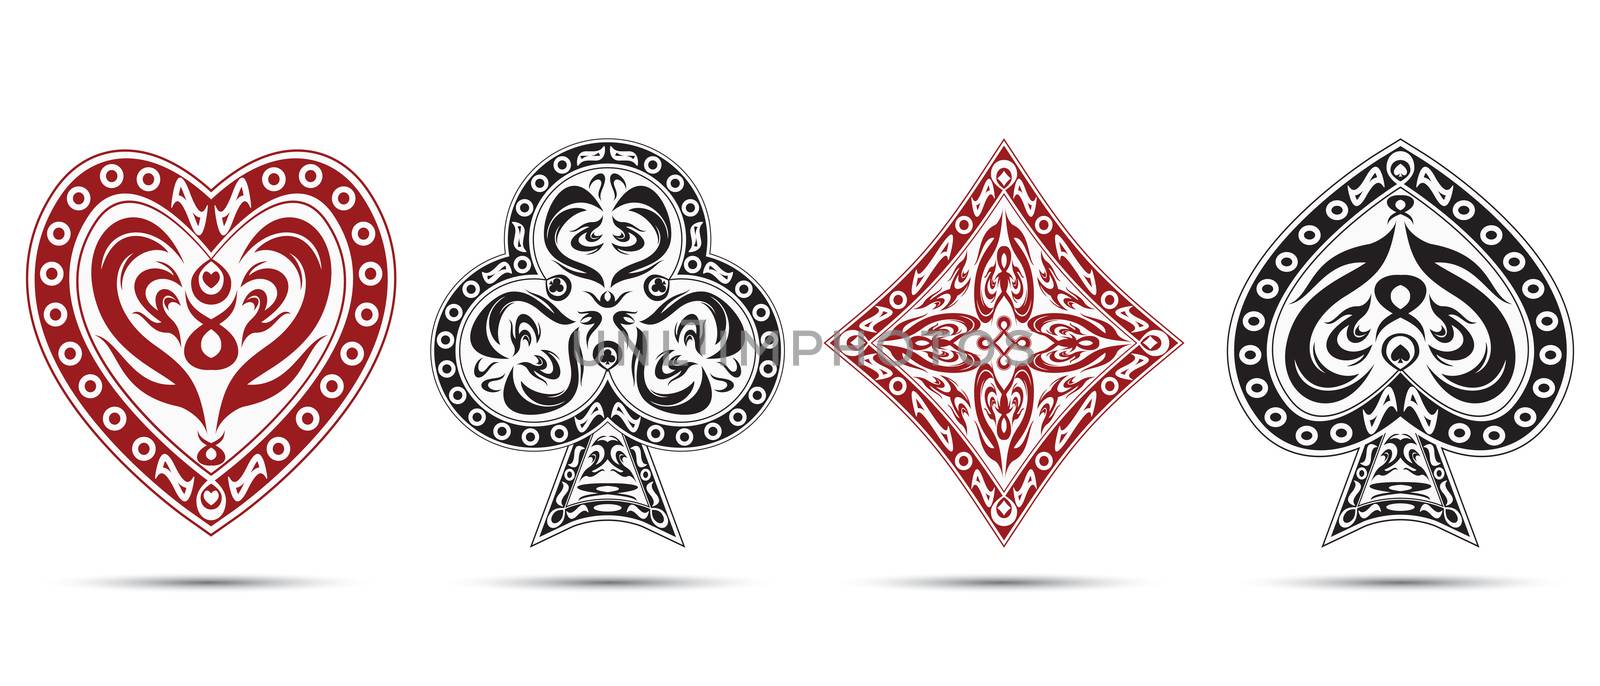 spades, hearts, diamonds, clubs poker cards symbols set isolated on white background